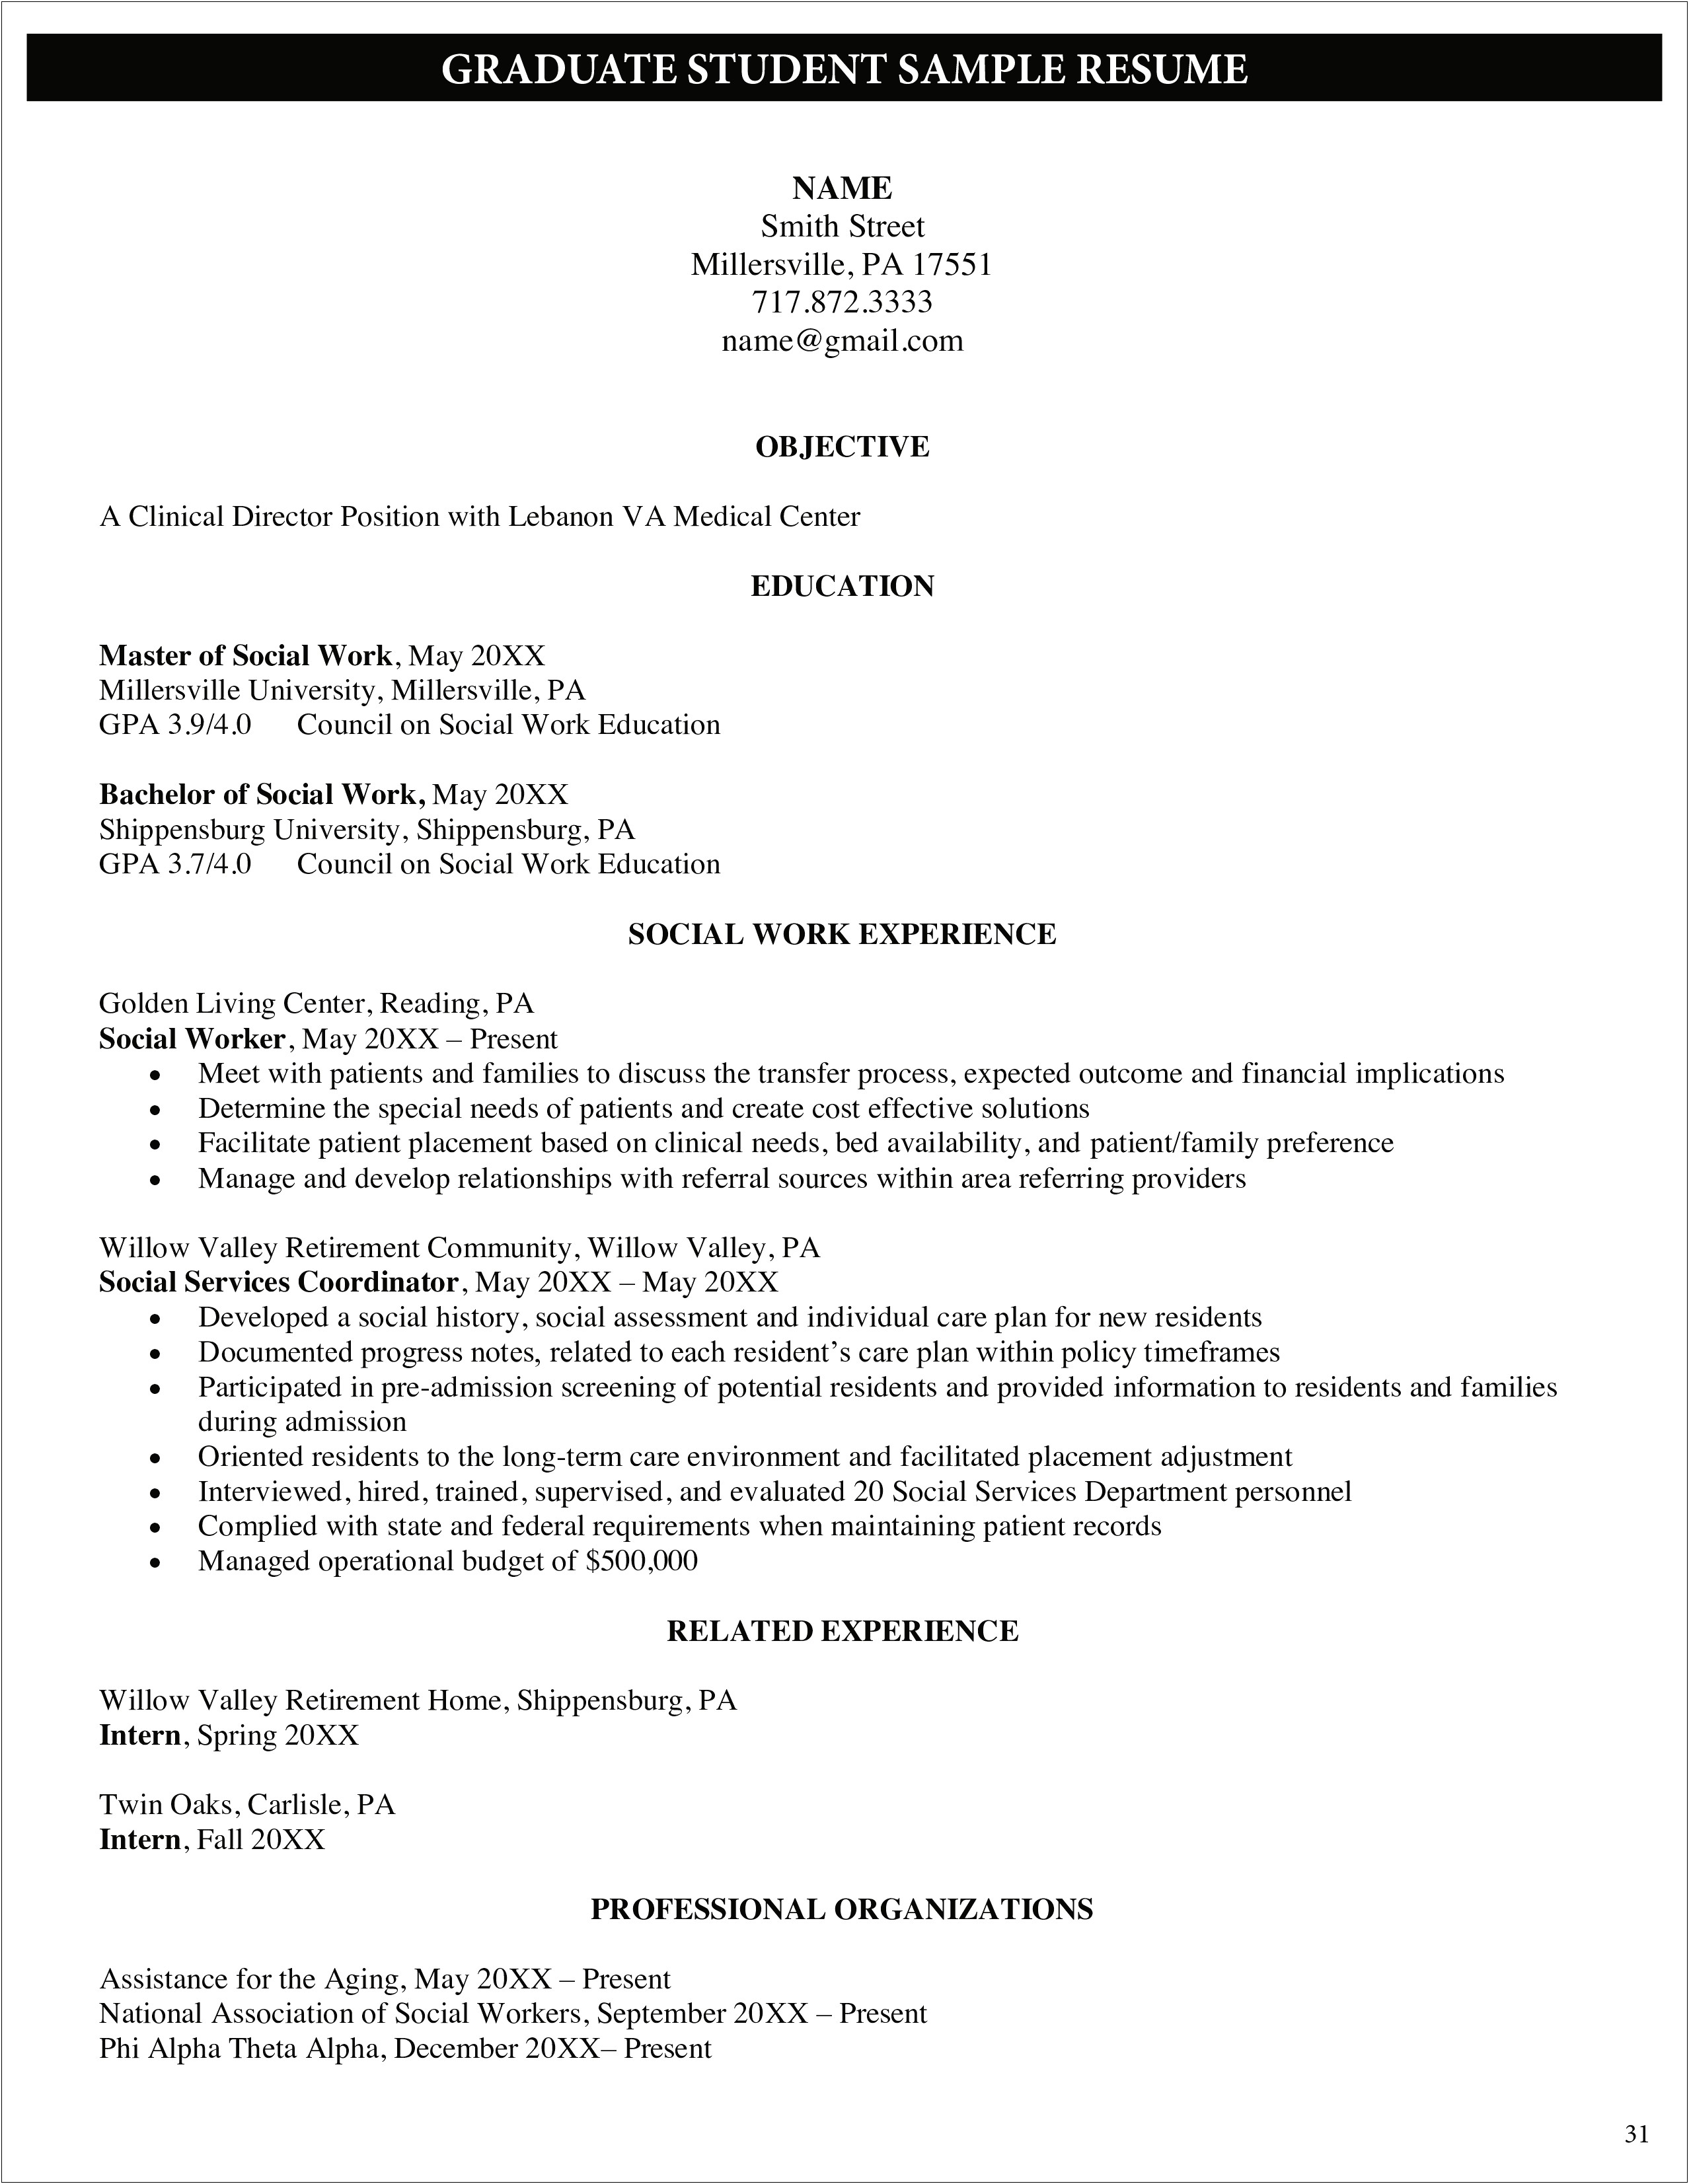 Sample Resume For Undergraduate Transfer Student